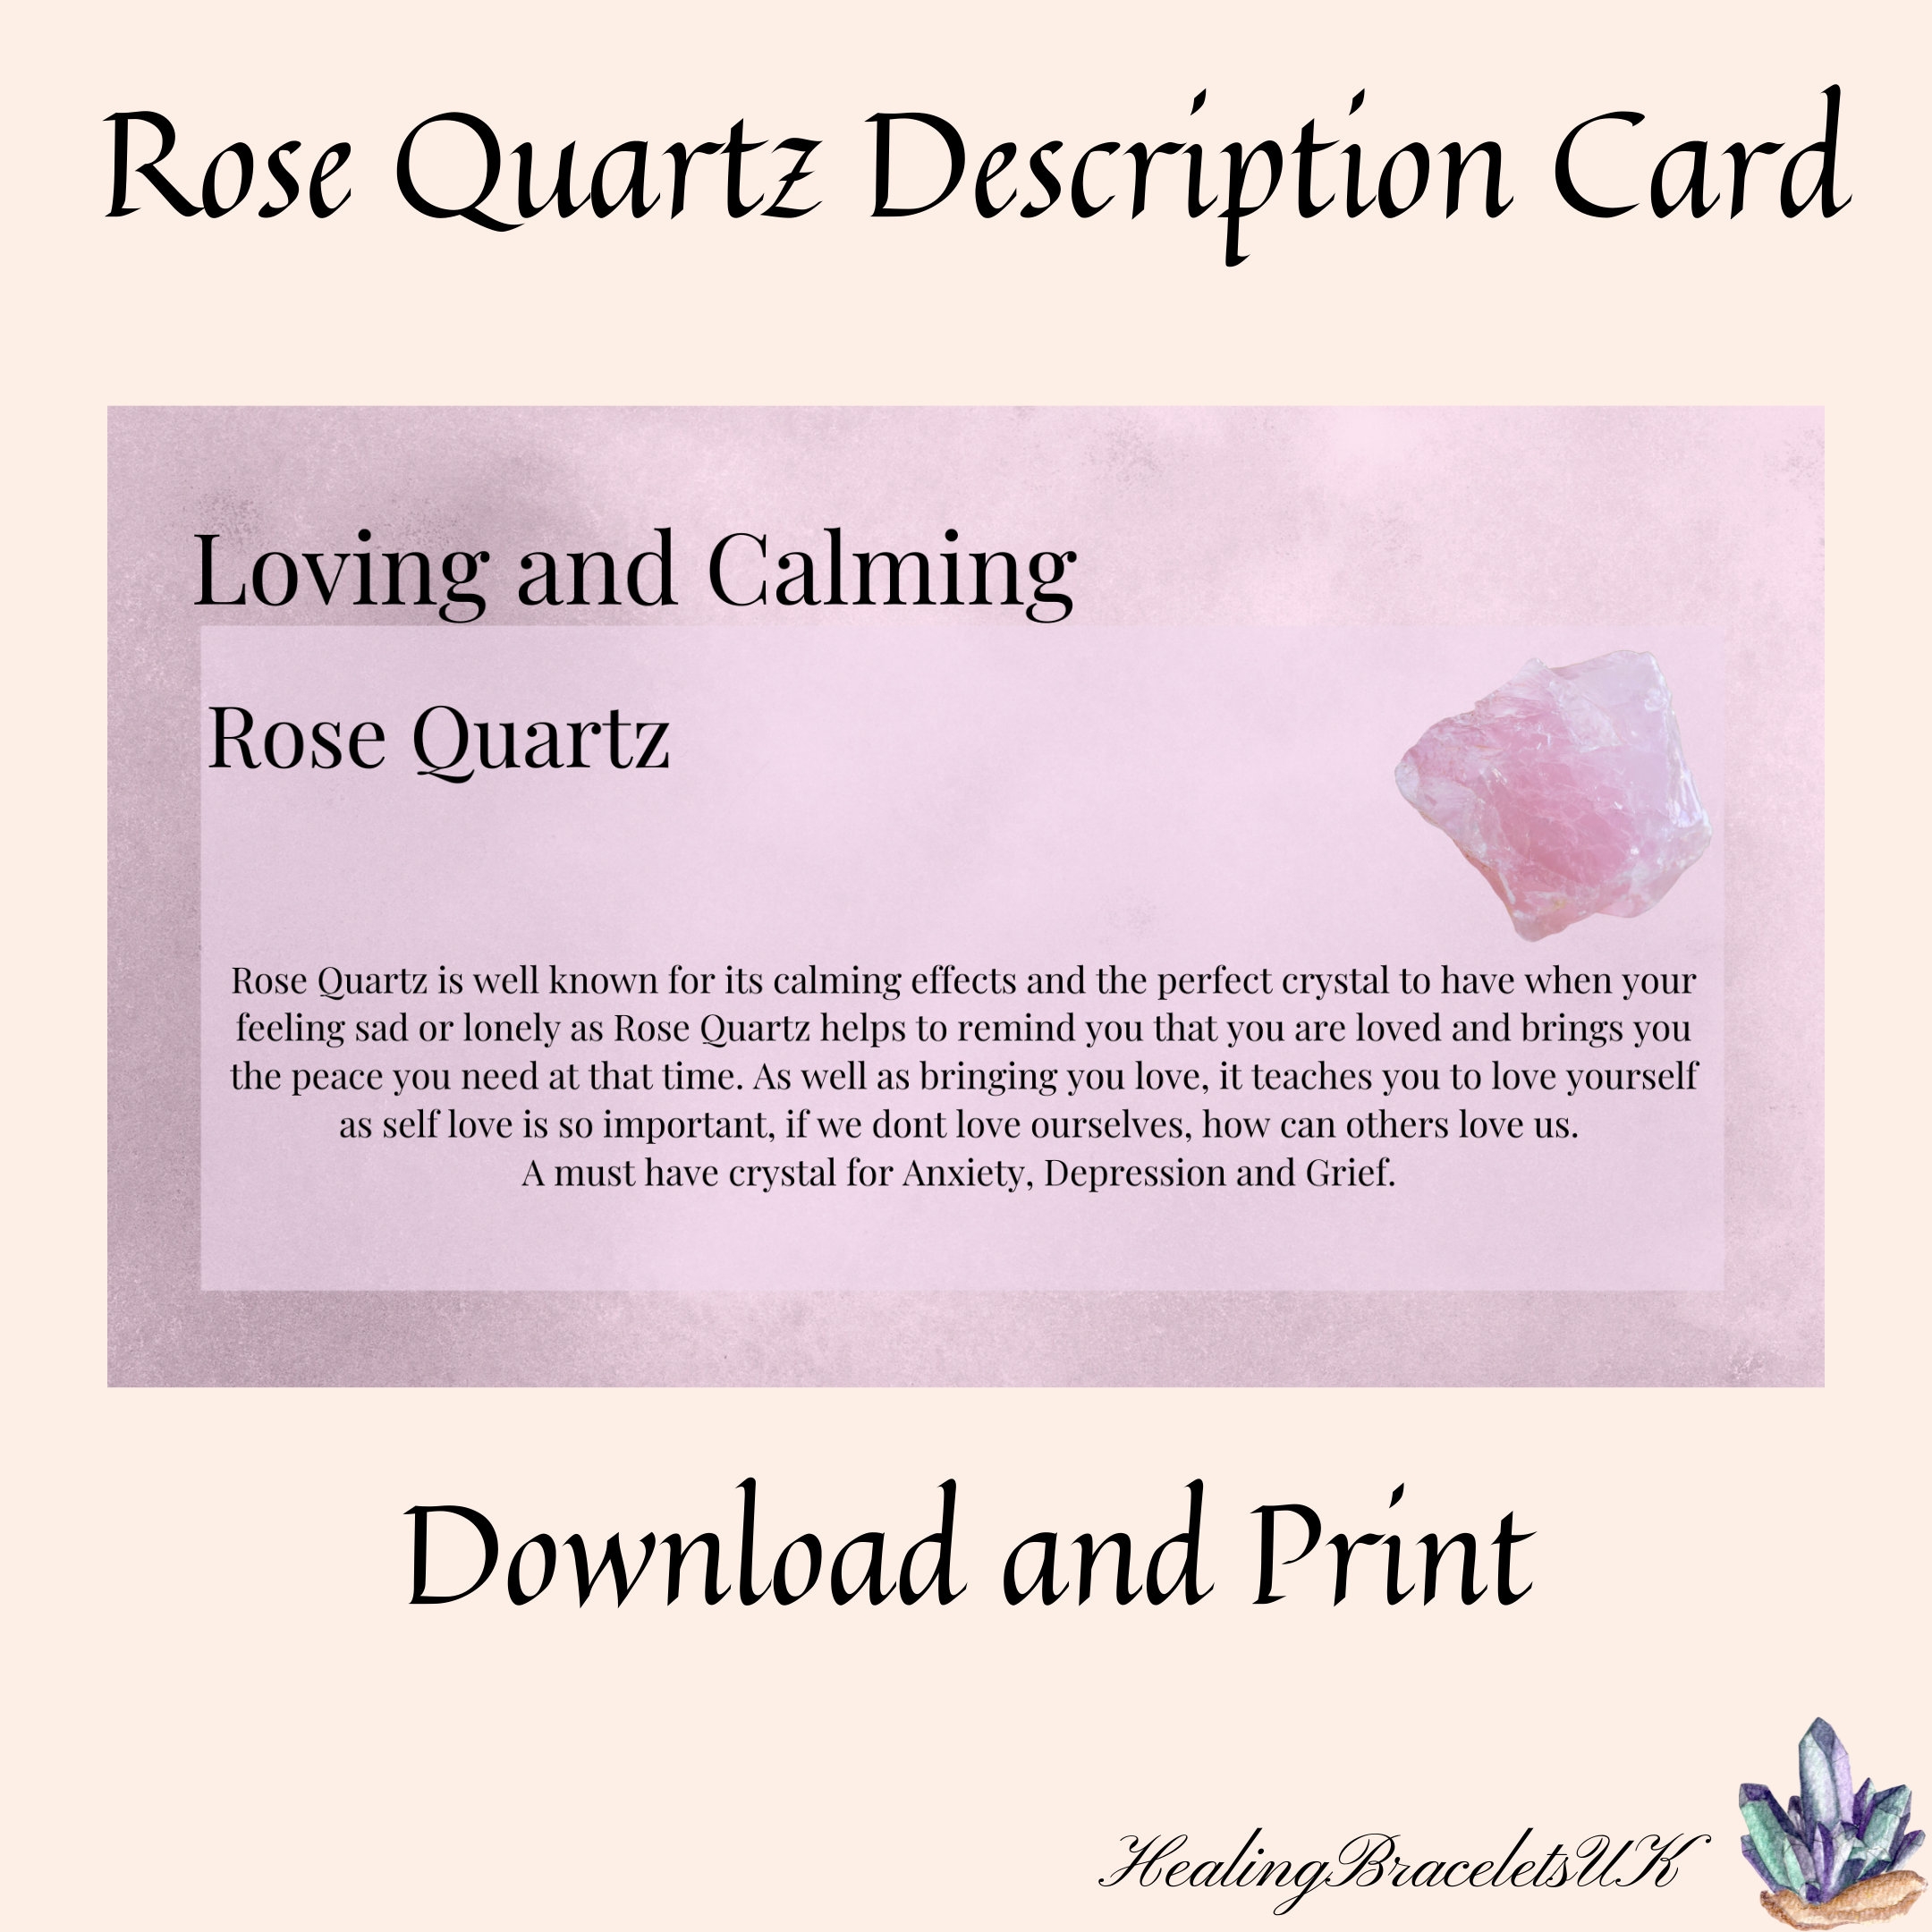 Rose Quartz Digital Description Card Etsy